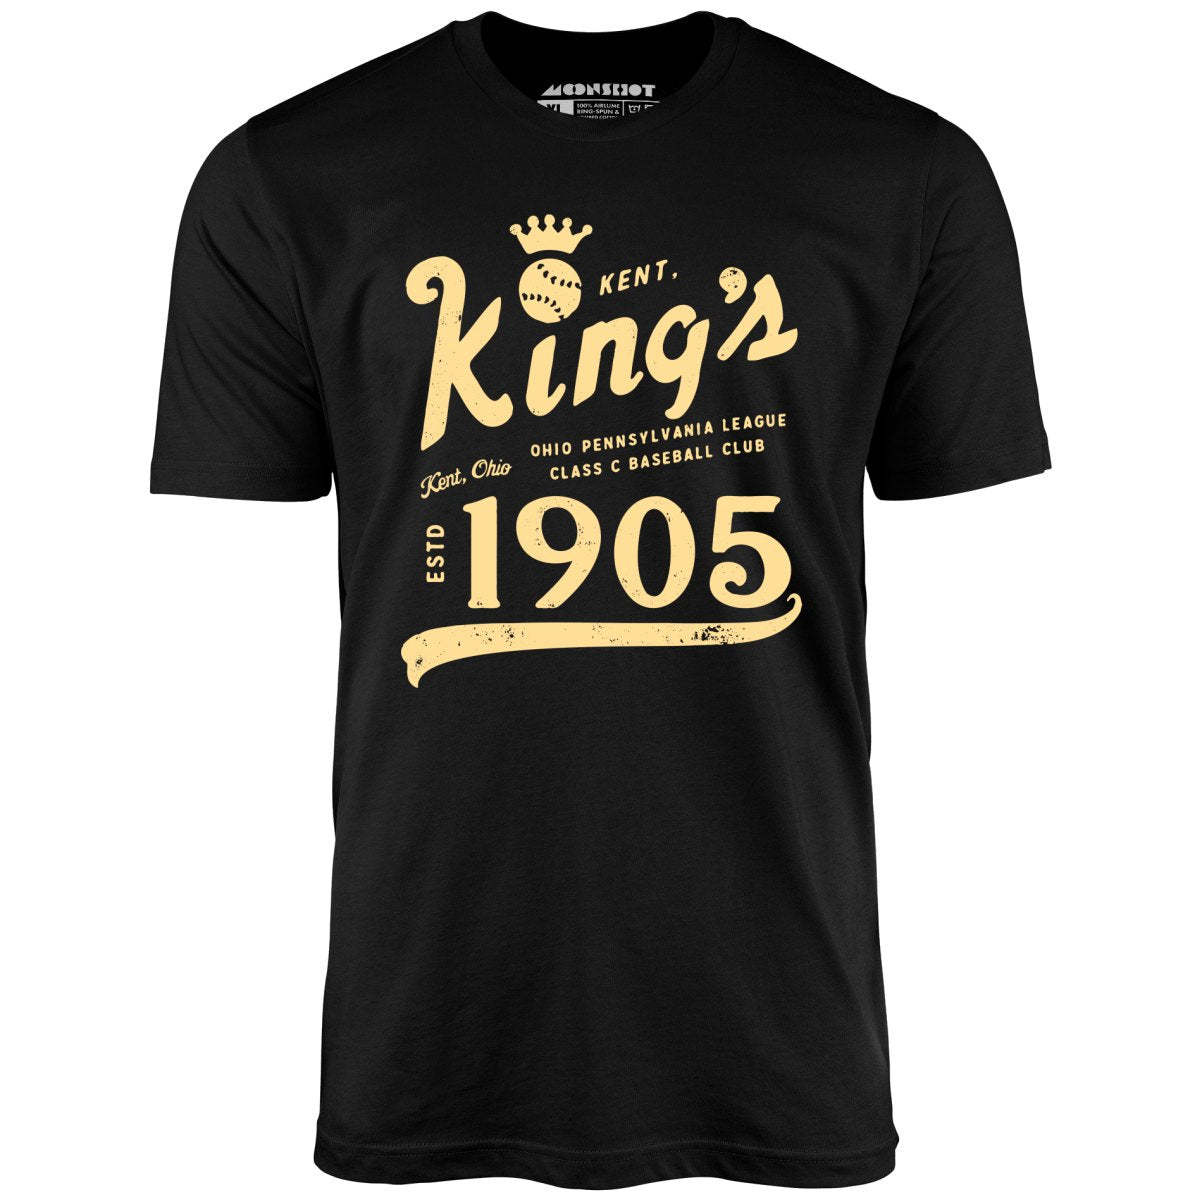 Kent Kings - Ohio - Vintage Defunct Baseball Teams - Unisex T-Shirt